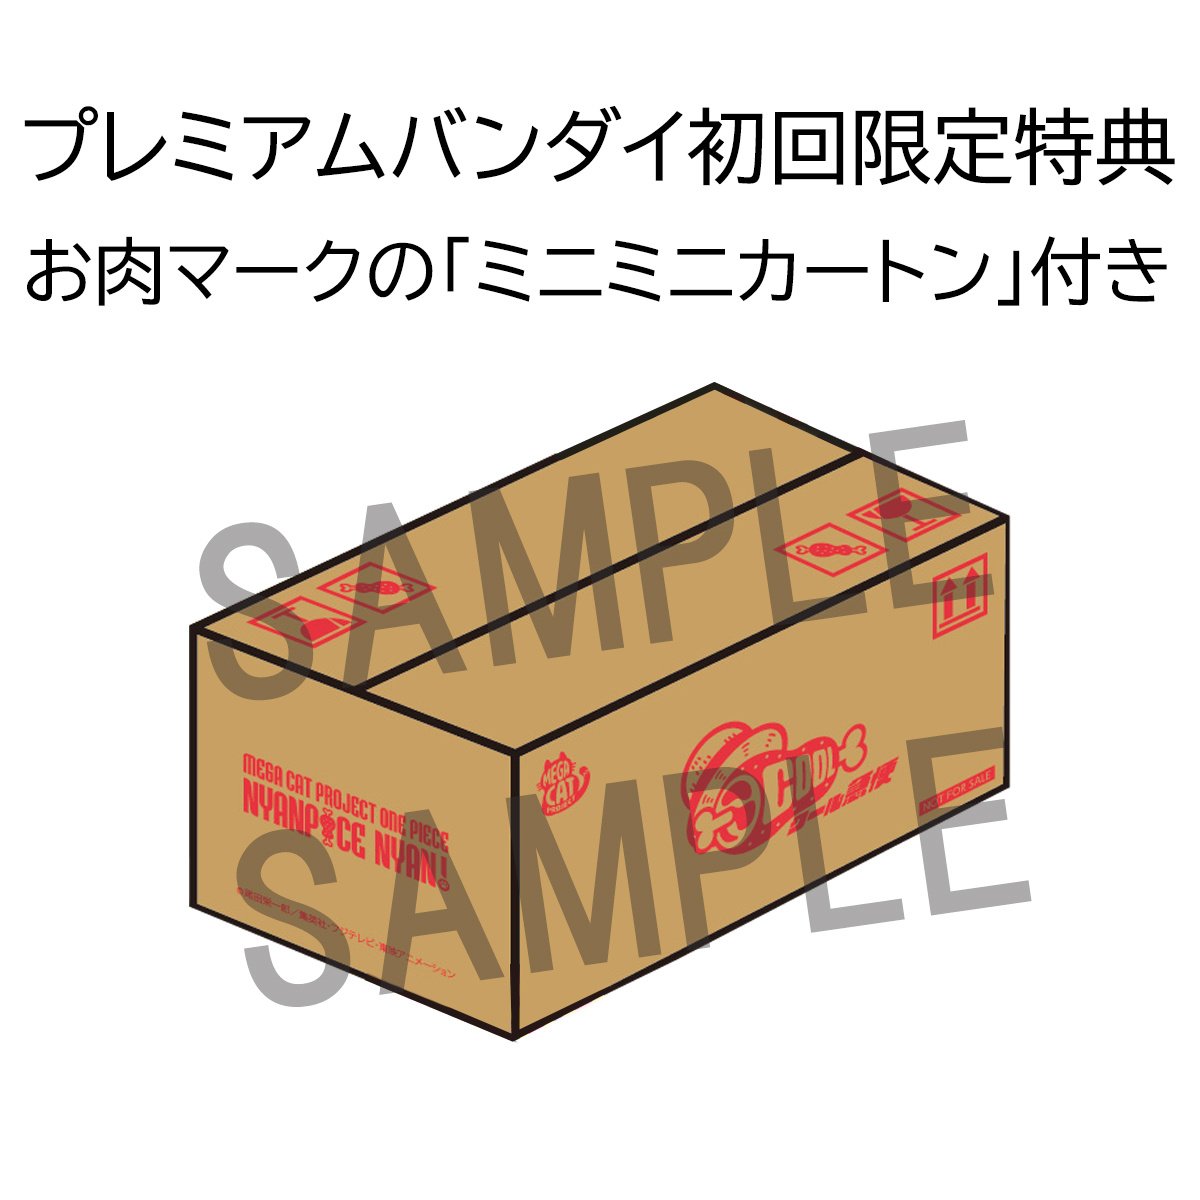 Mega Cat Project One Piece NyanPiece Nyan! Ver. Luffy with Rivals Box Set  w/ Bonus Mini Carton